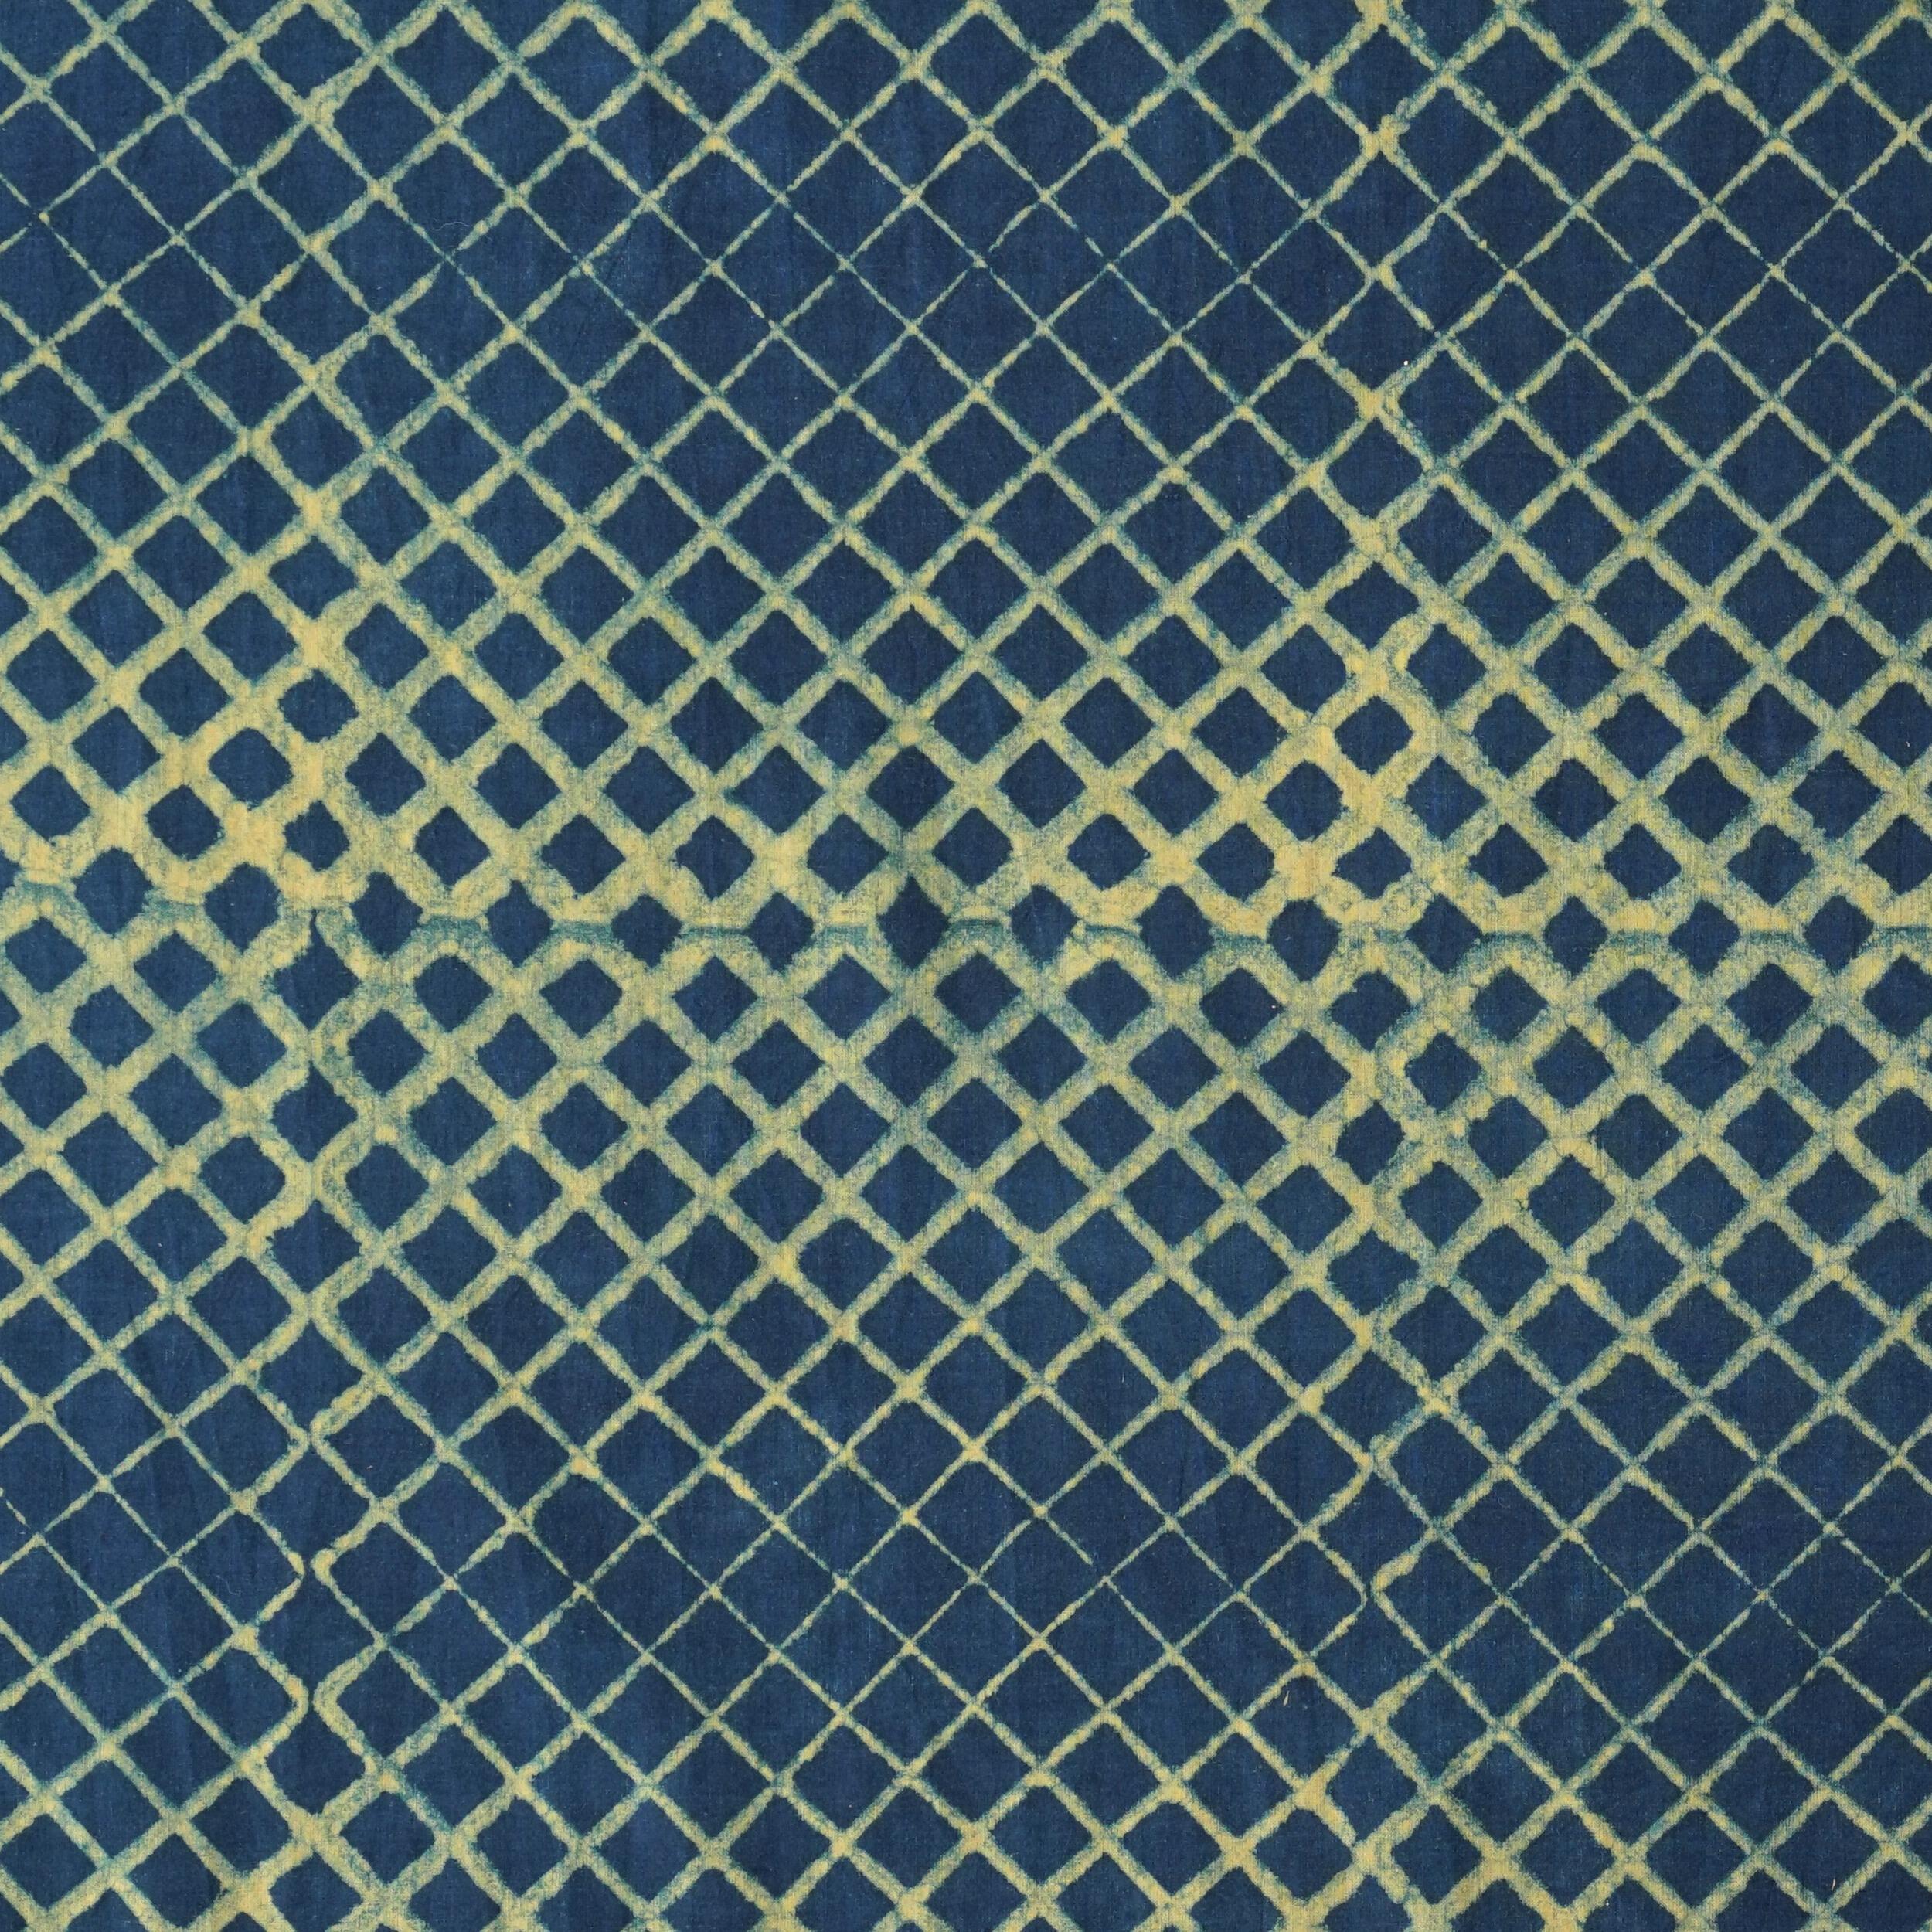 2 - AHM46 - Block-Printed Cotton - Fading Grid Print - Indigo Blue & Tamarisk Yellow Dyed - Flat